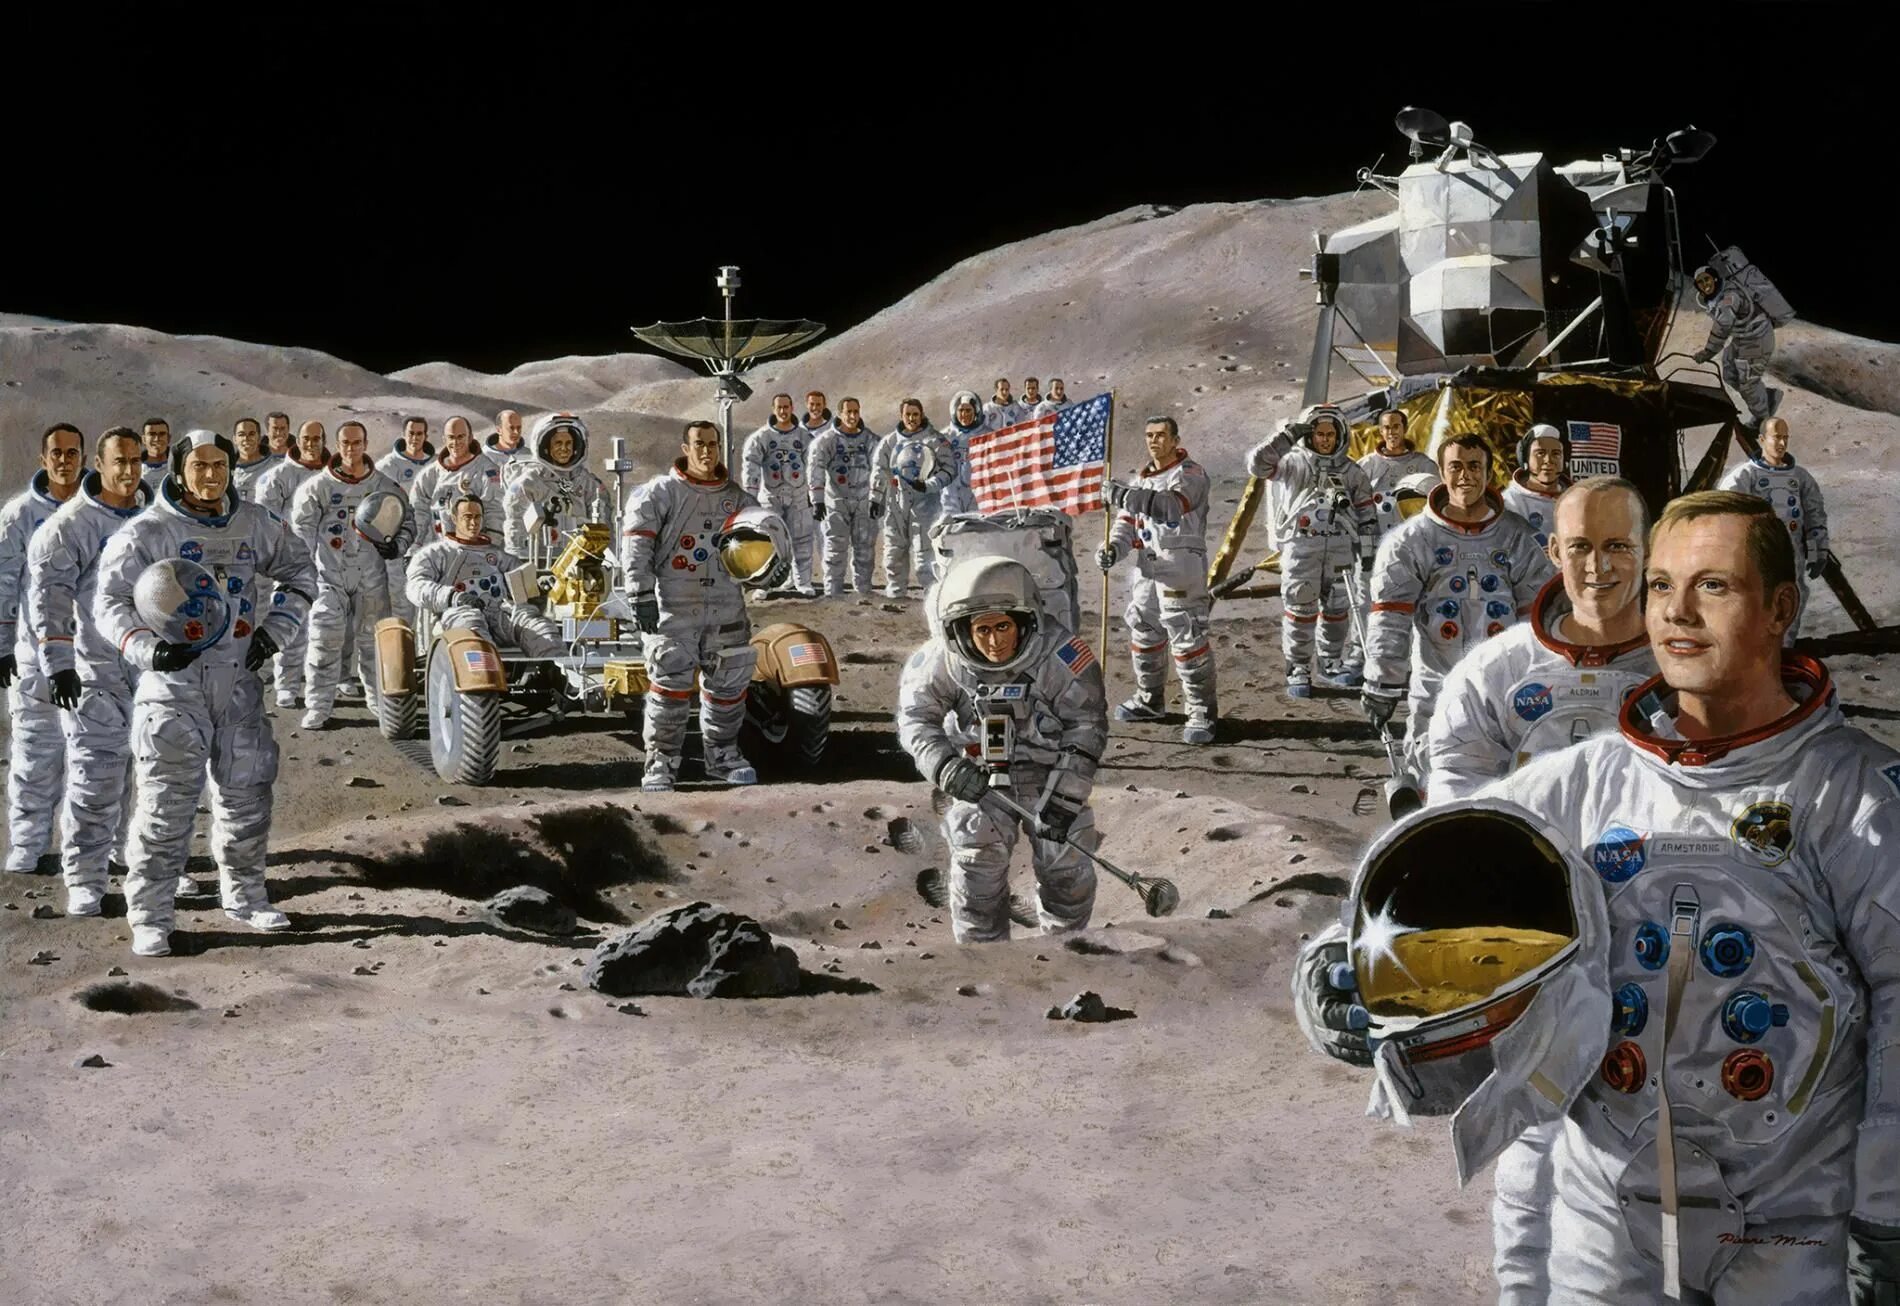 Есть ли на луне. Аполлон астронавты на Луне. Американцы на Луне 1969. Аполлон 11 высадка. Высадка на луну 1969.